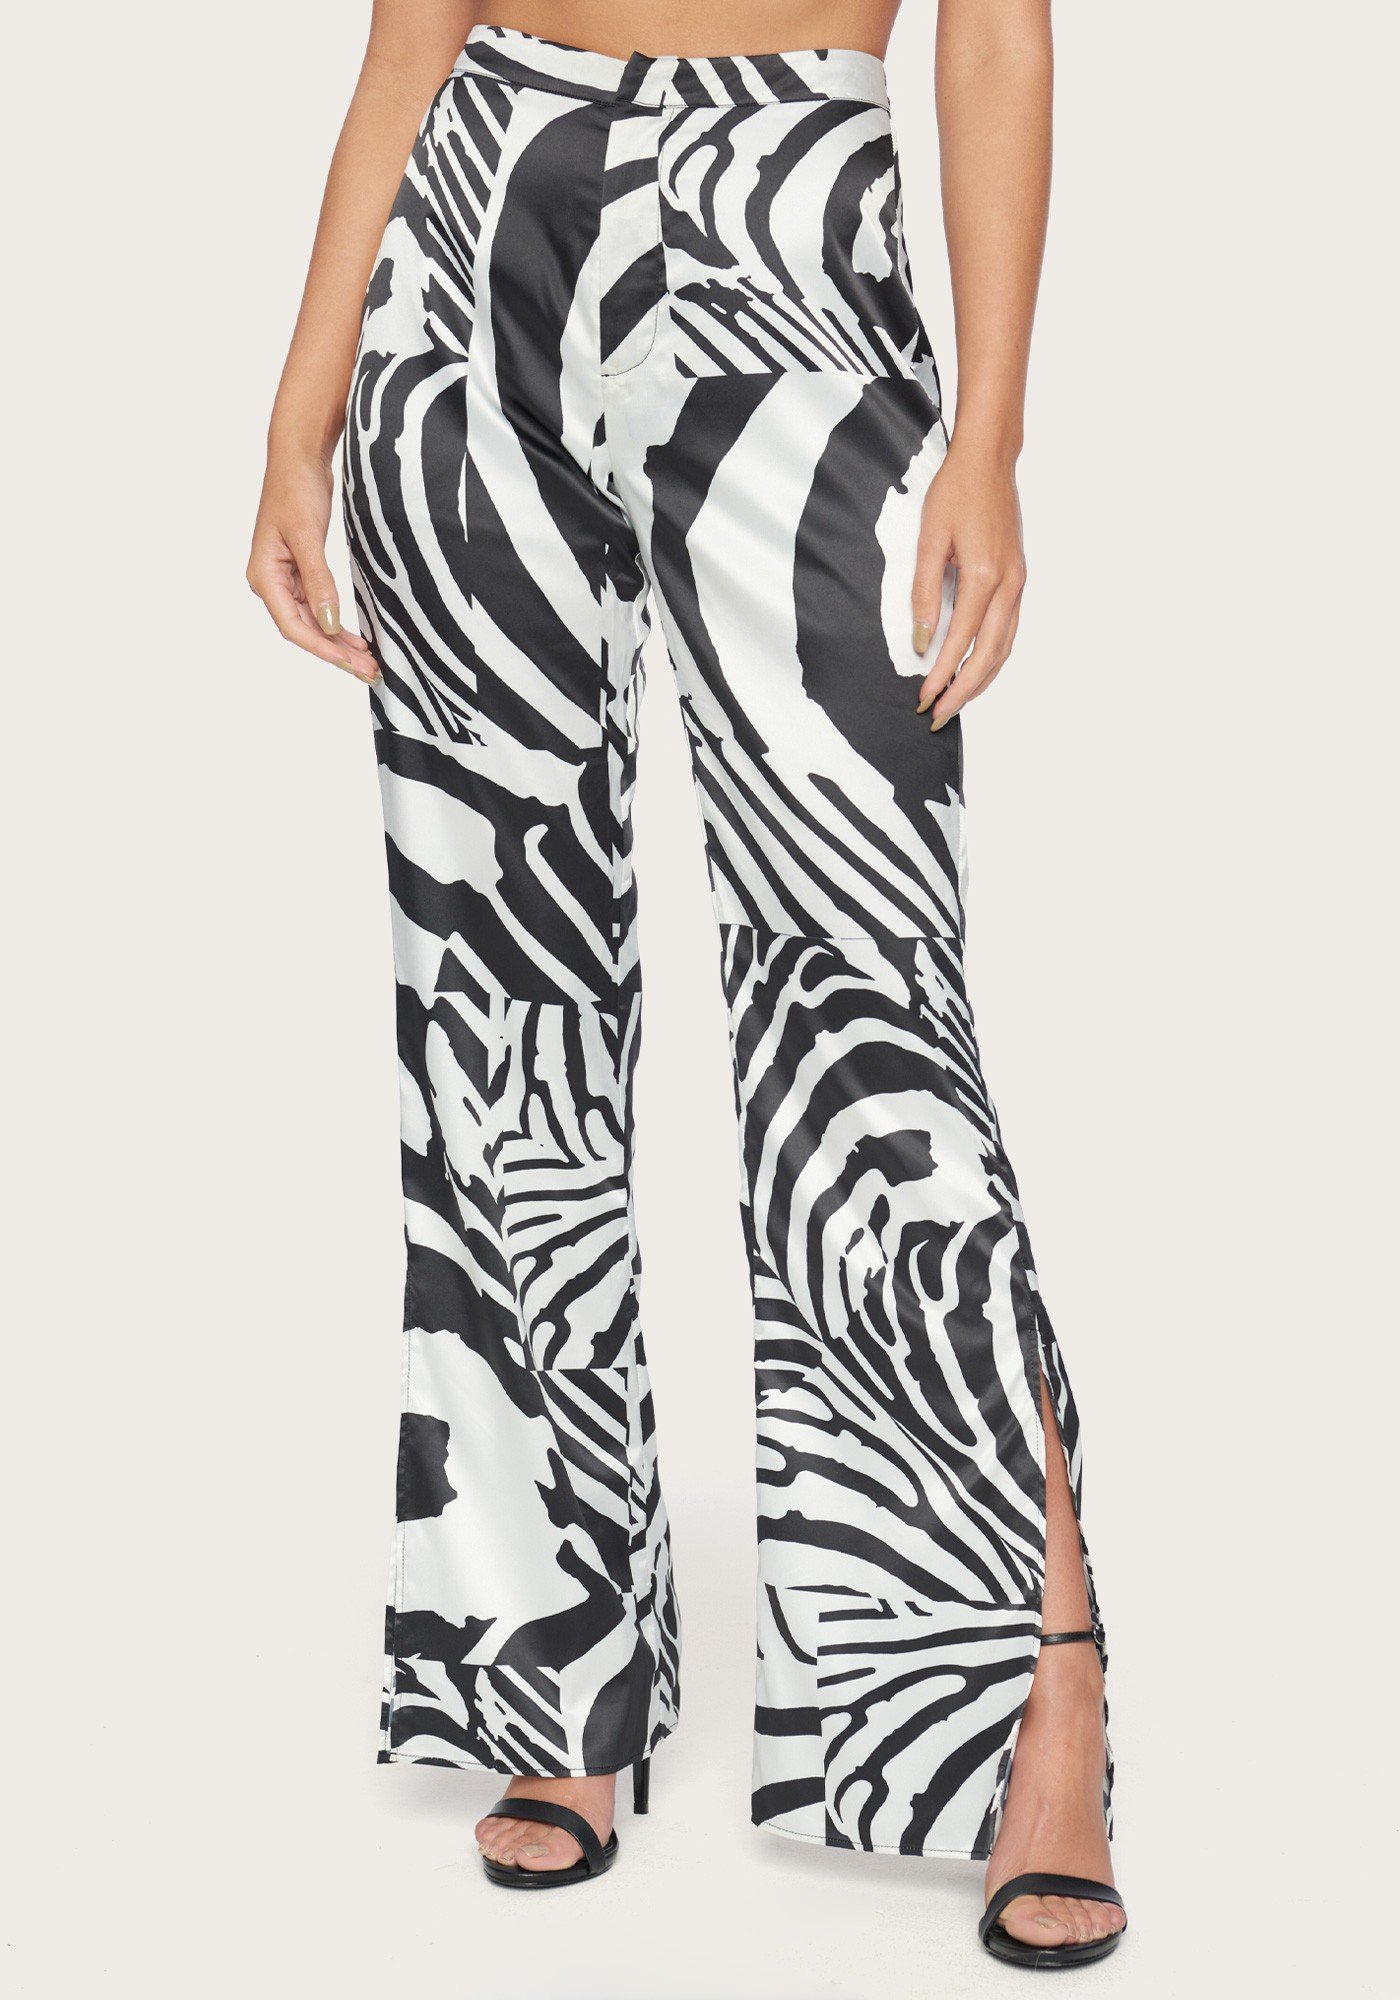 Bebe Women's Print Slit Wide Leg Pant, Size 8 in Abstract Zebra Polyester